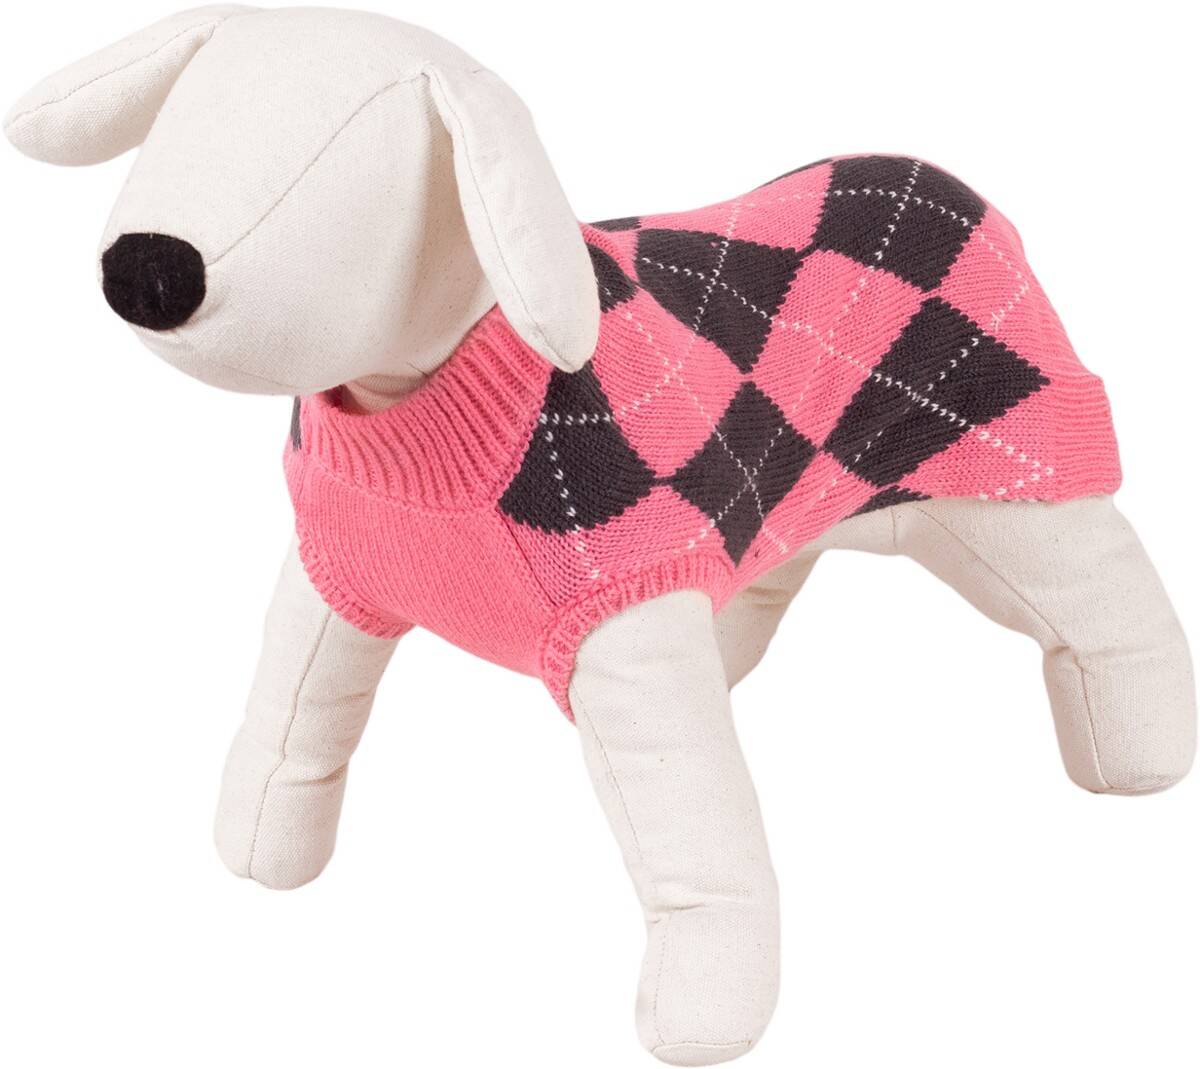 Dog Sweater / Rhomb Design - Happet 460S - Pink S - 25cm